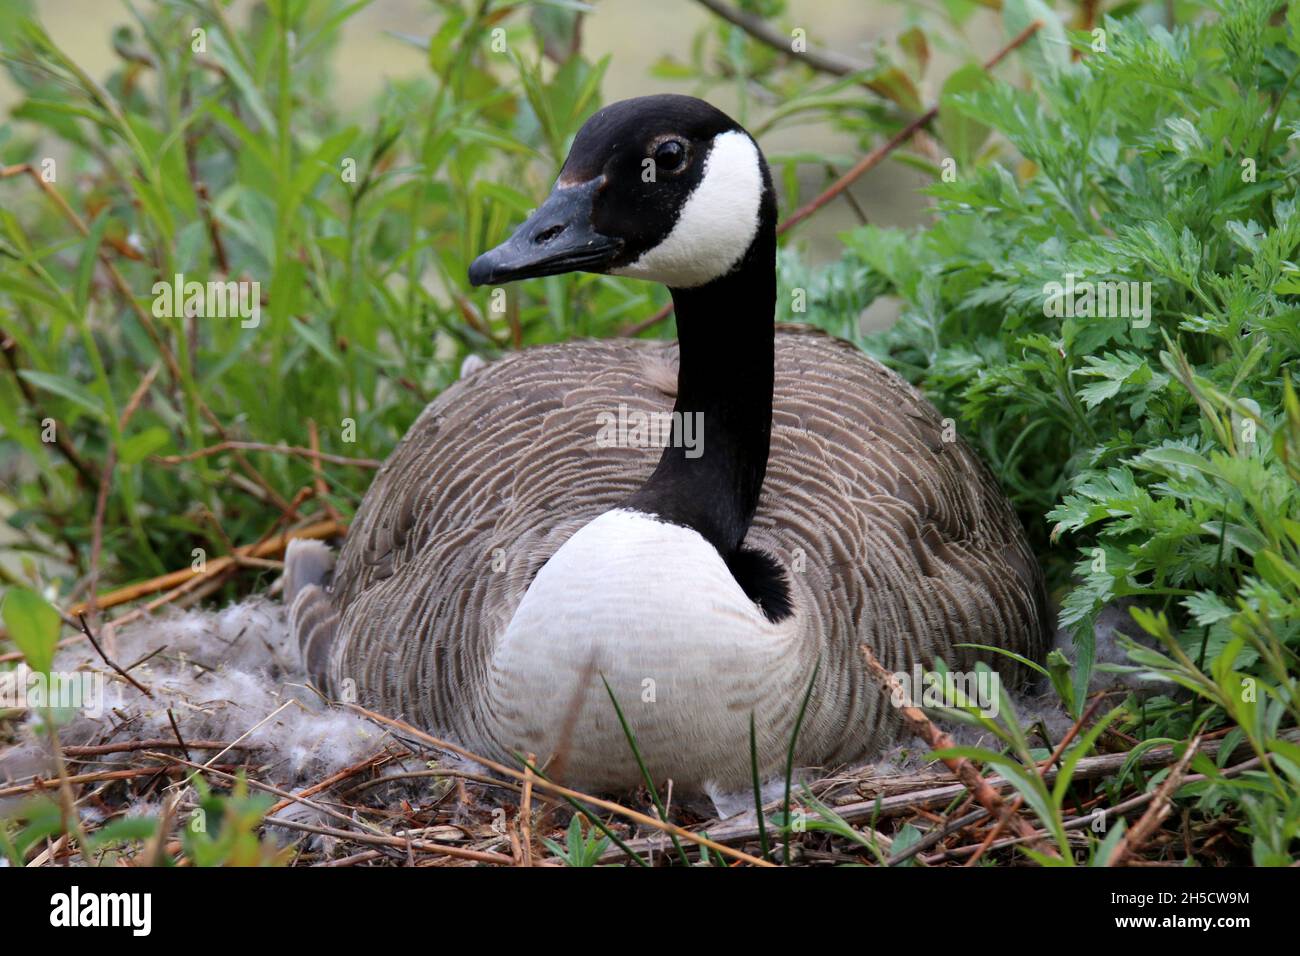 Canada goose (Branta canadensis), breeding in the nest, Germany Stock Photo